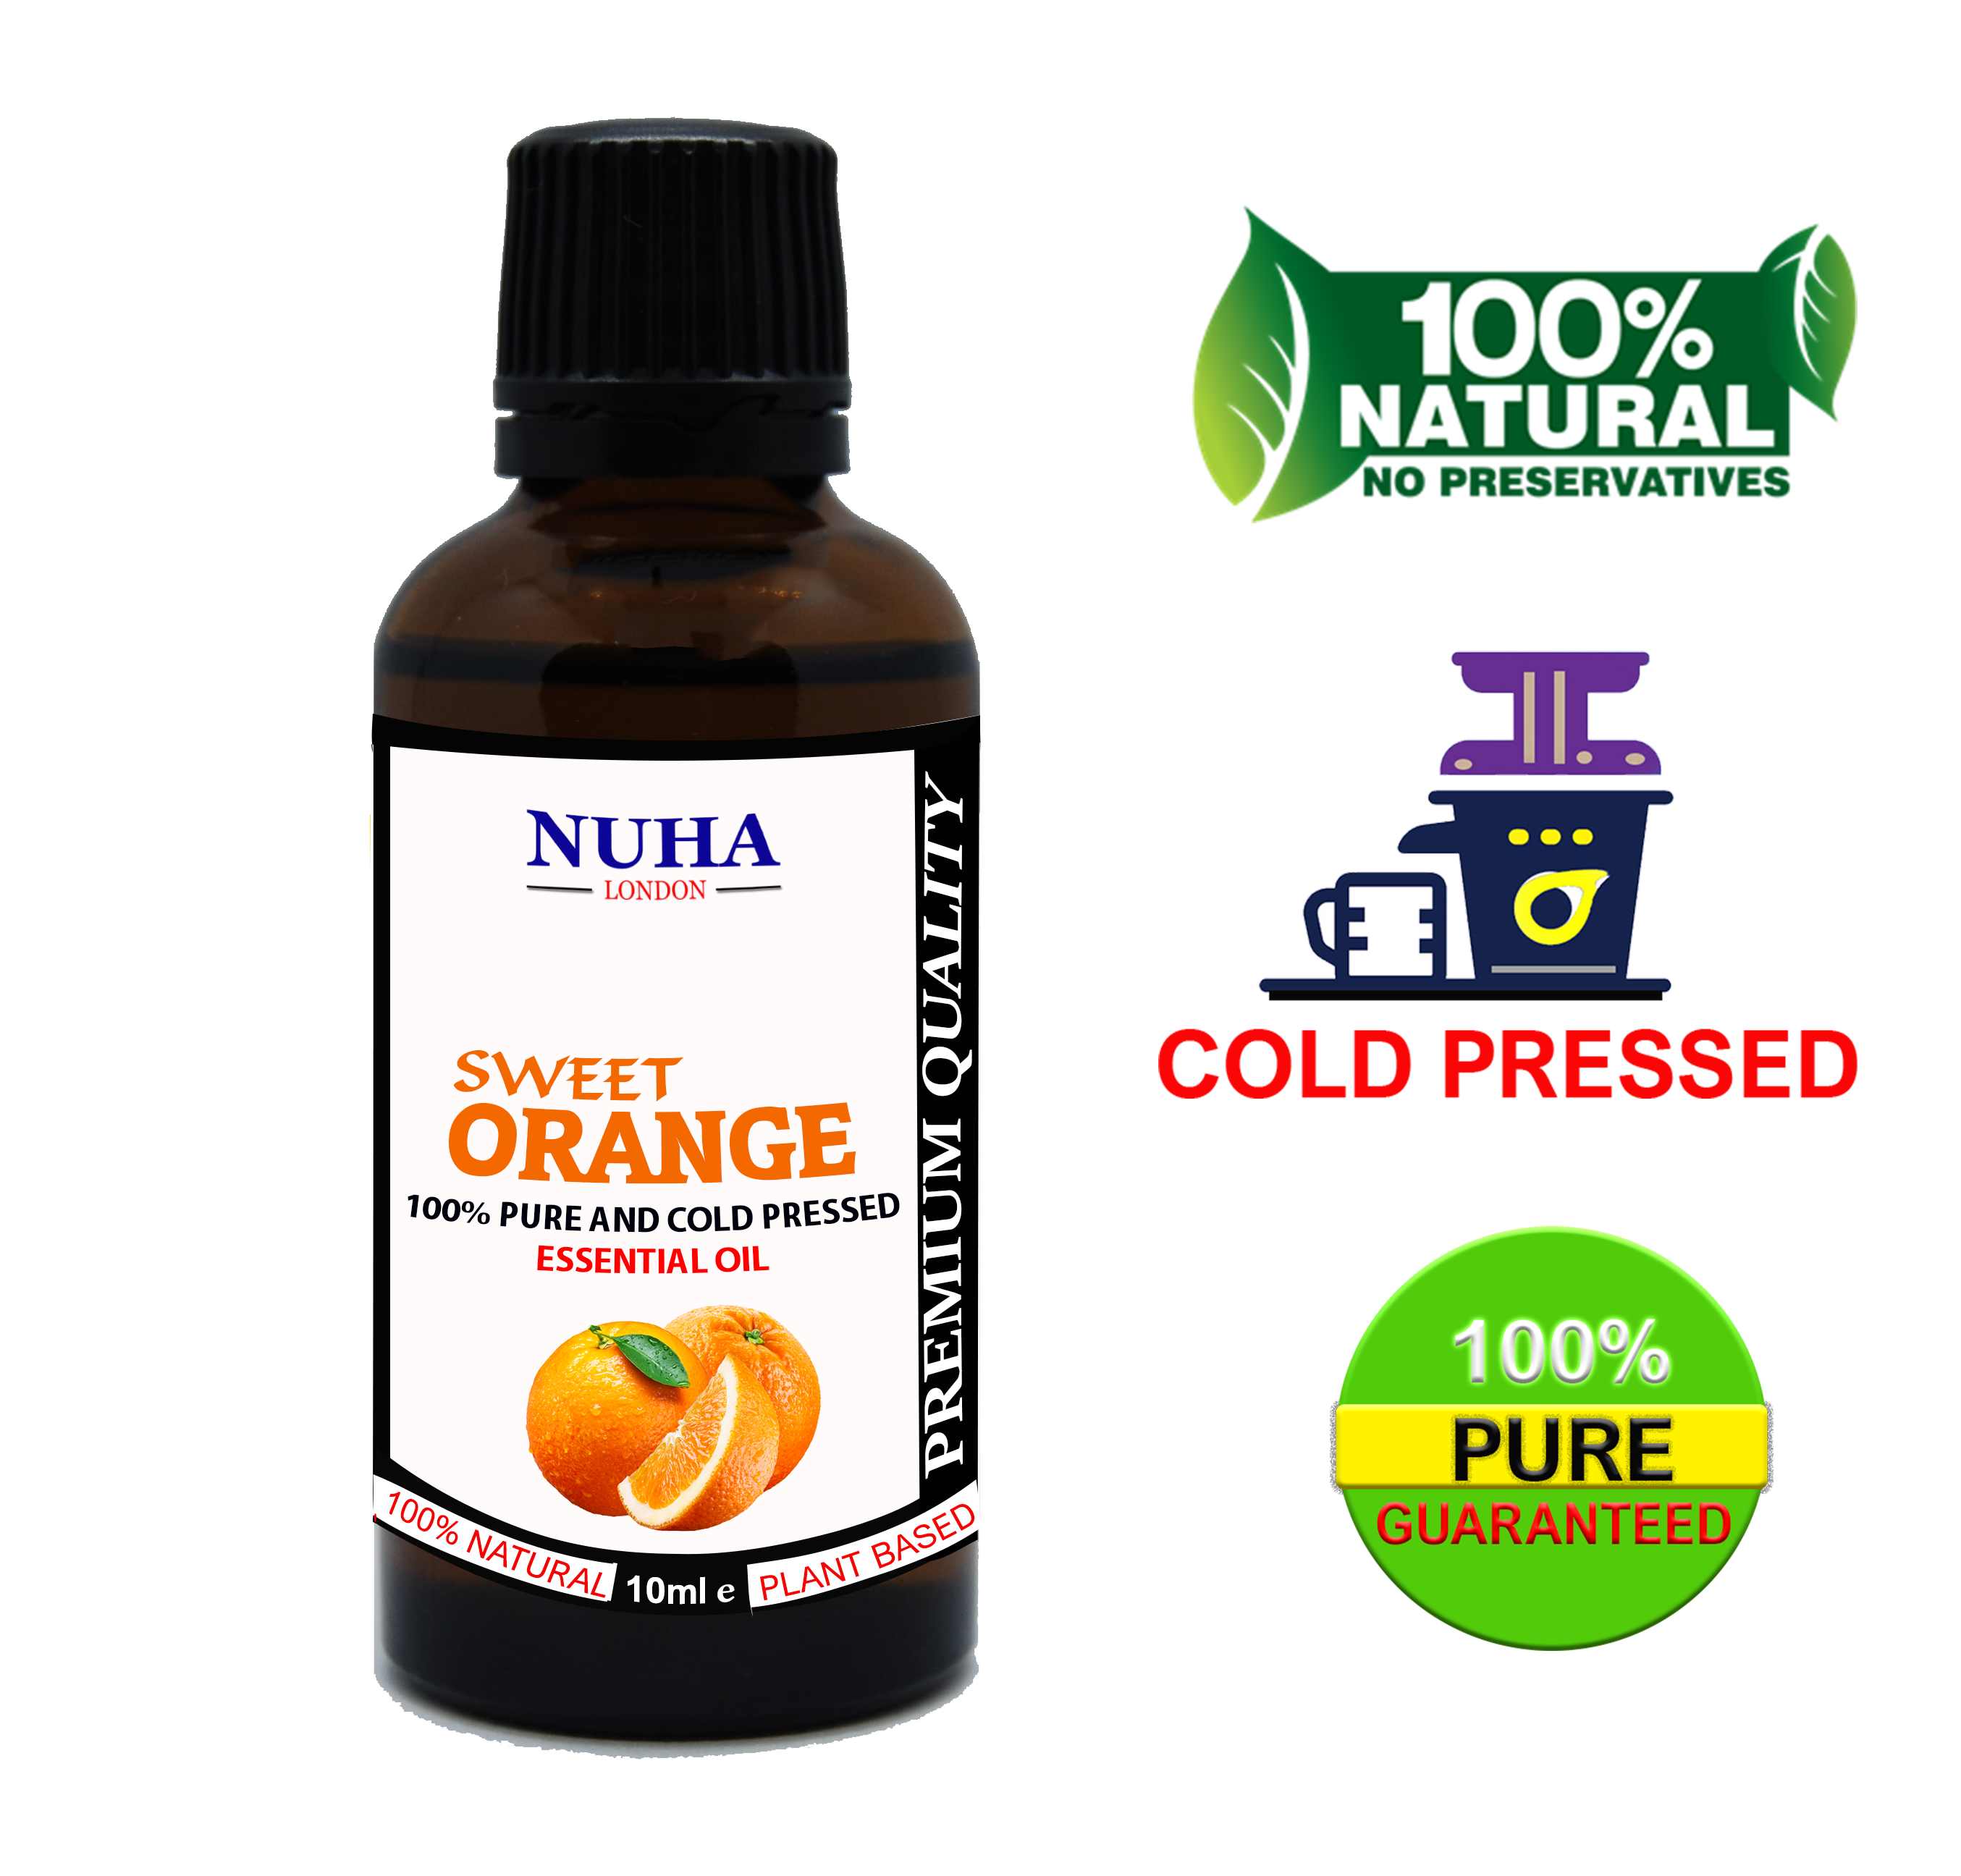 Nuha Sweet Orange Essential Oil 10ml Beauty Mind Ll Beauty